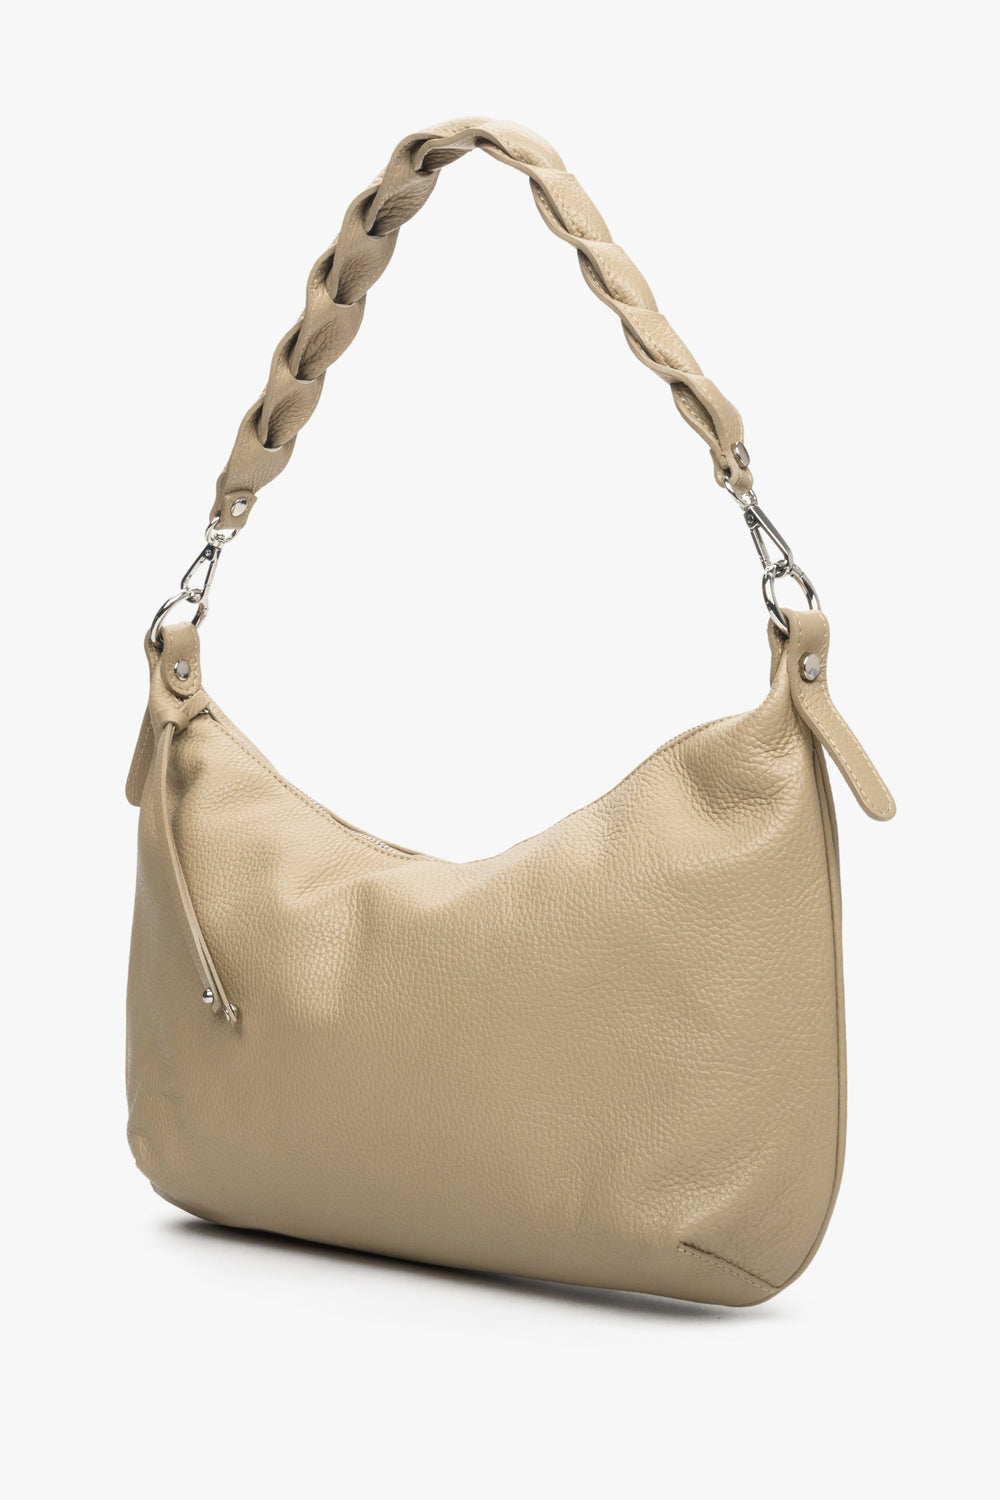 Damska torebka shoulder bag marki Estro w kolorze beżowym.